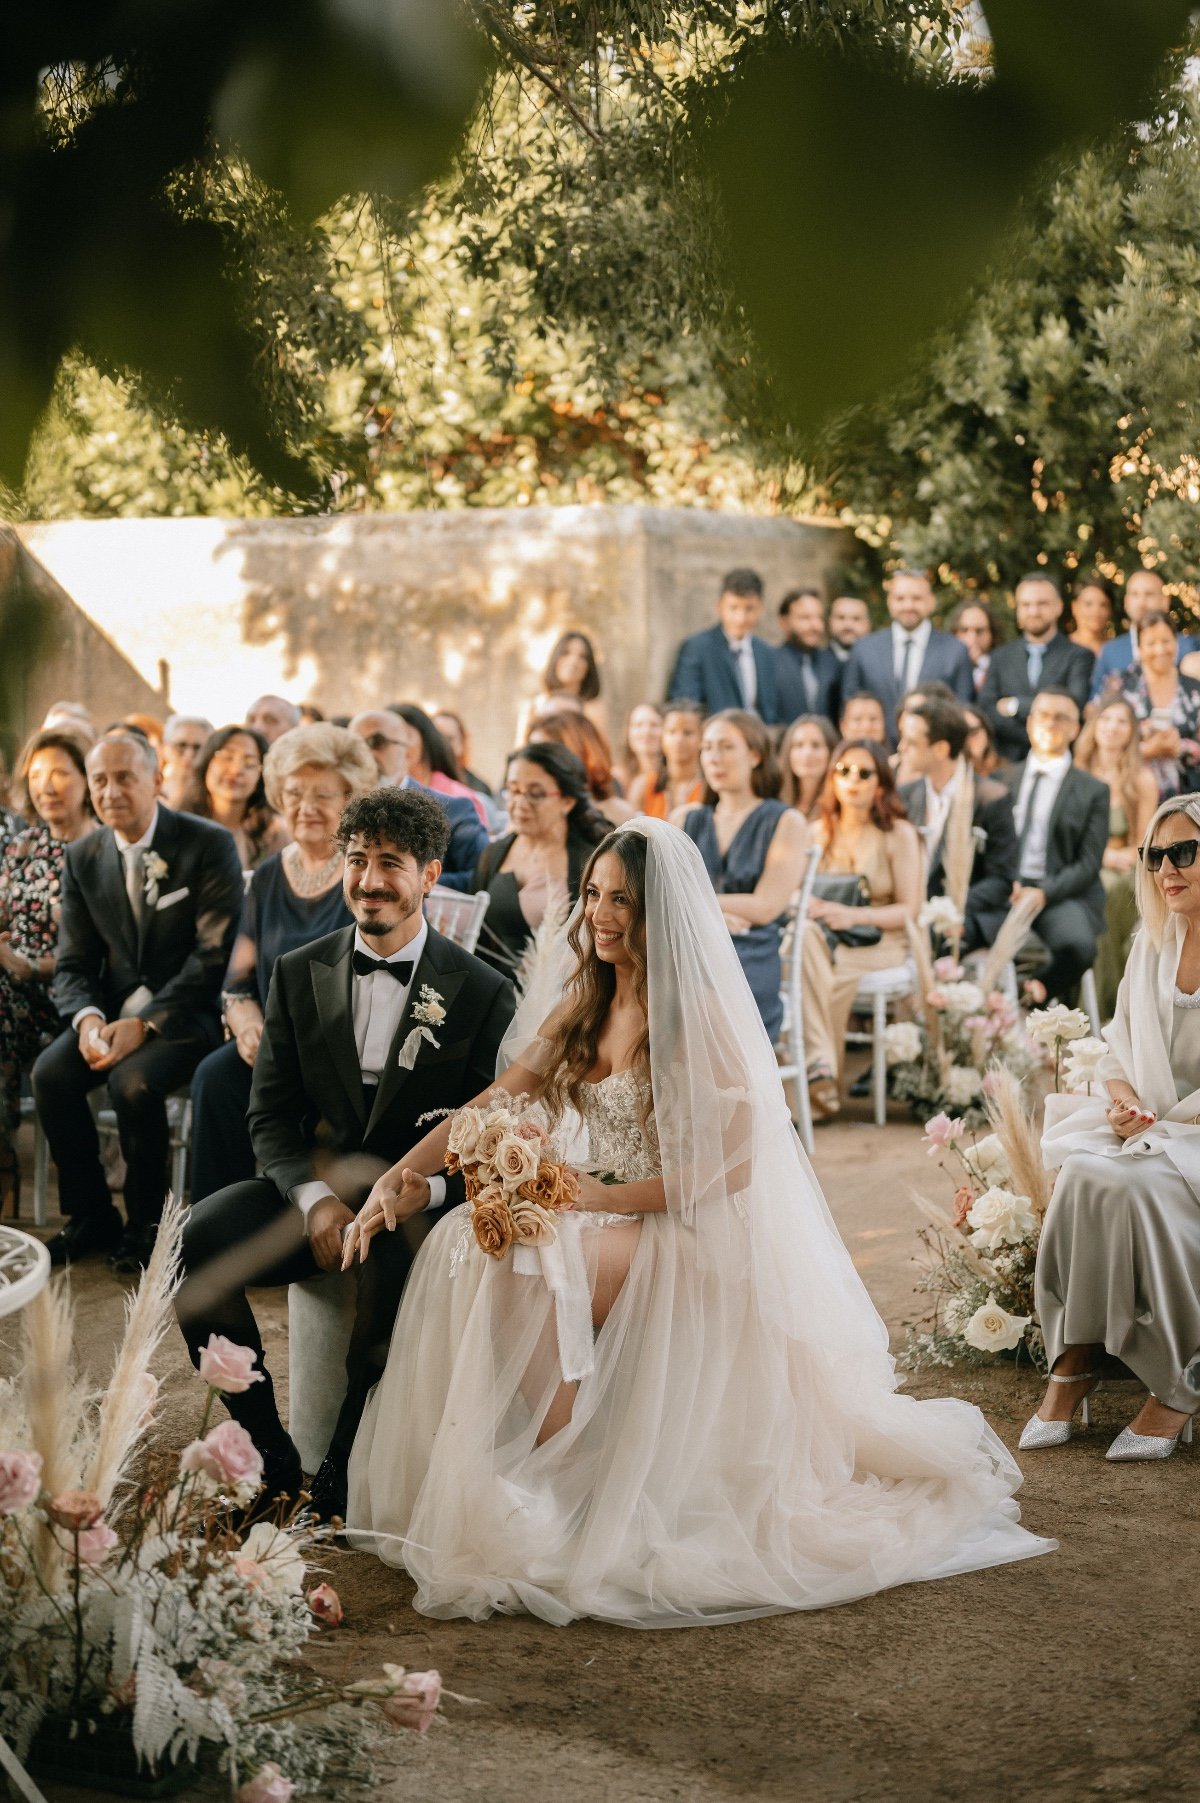 Italian wedding ceremony traditions